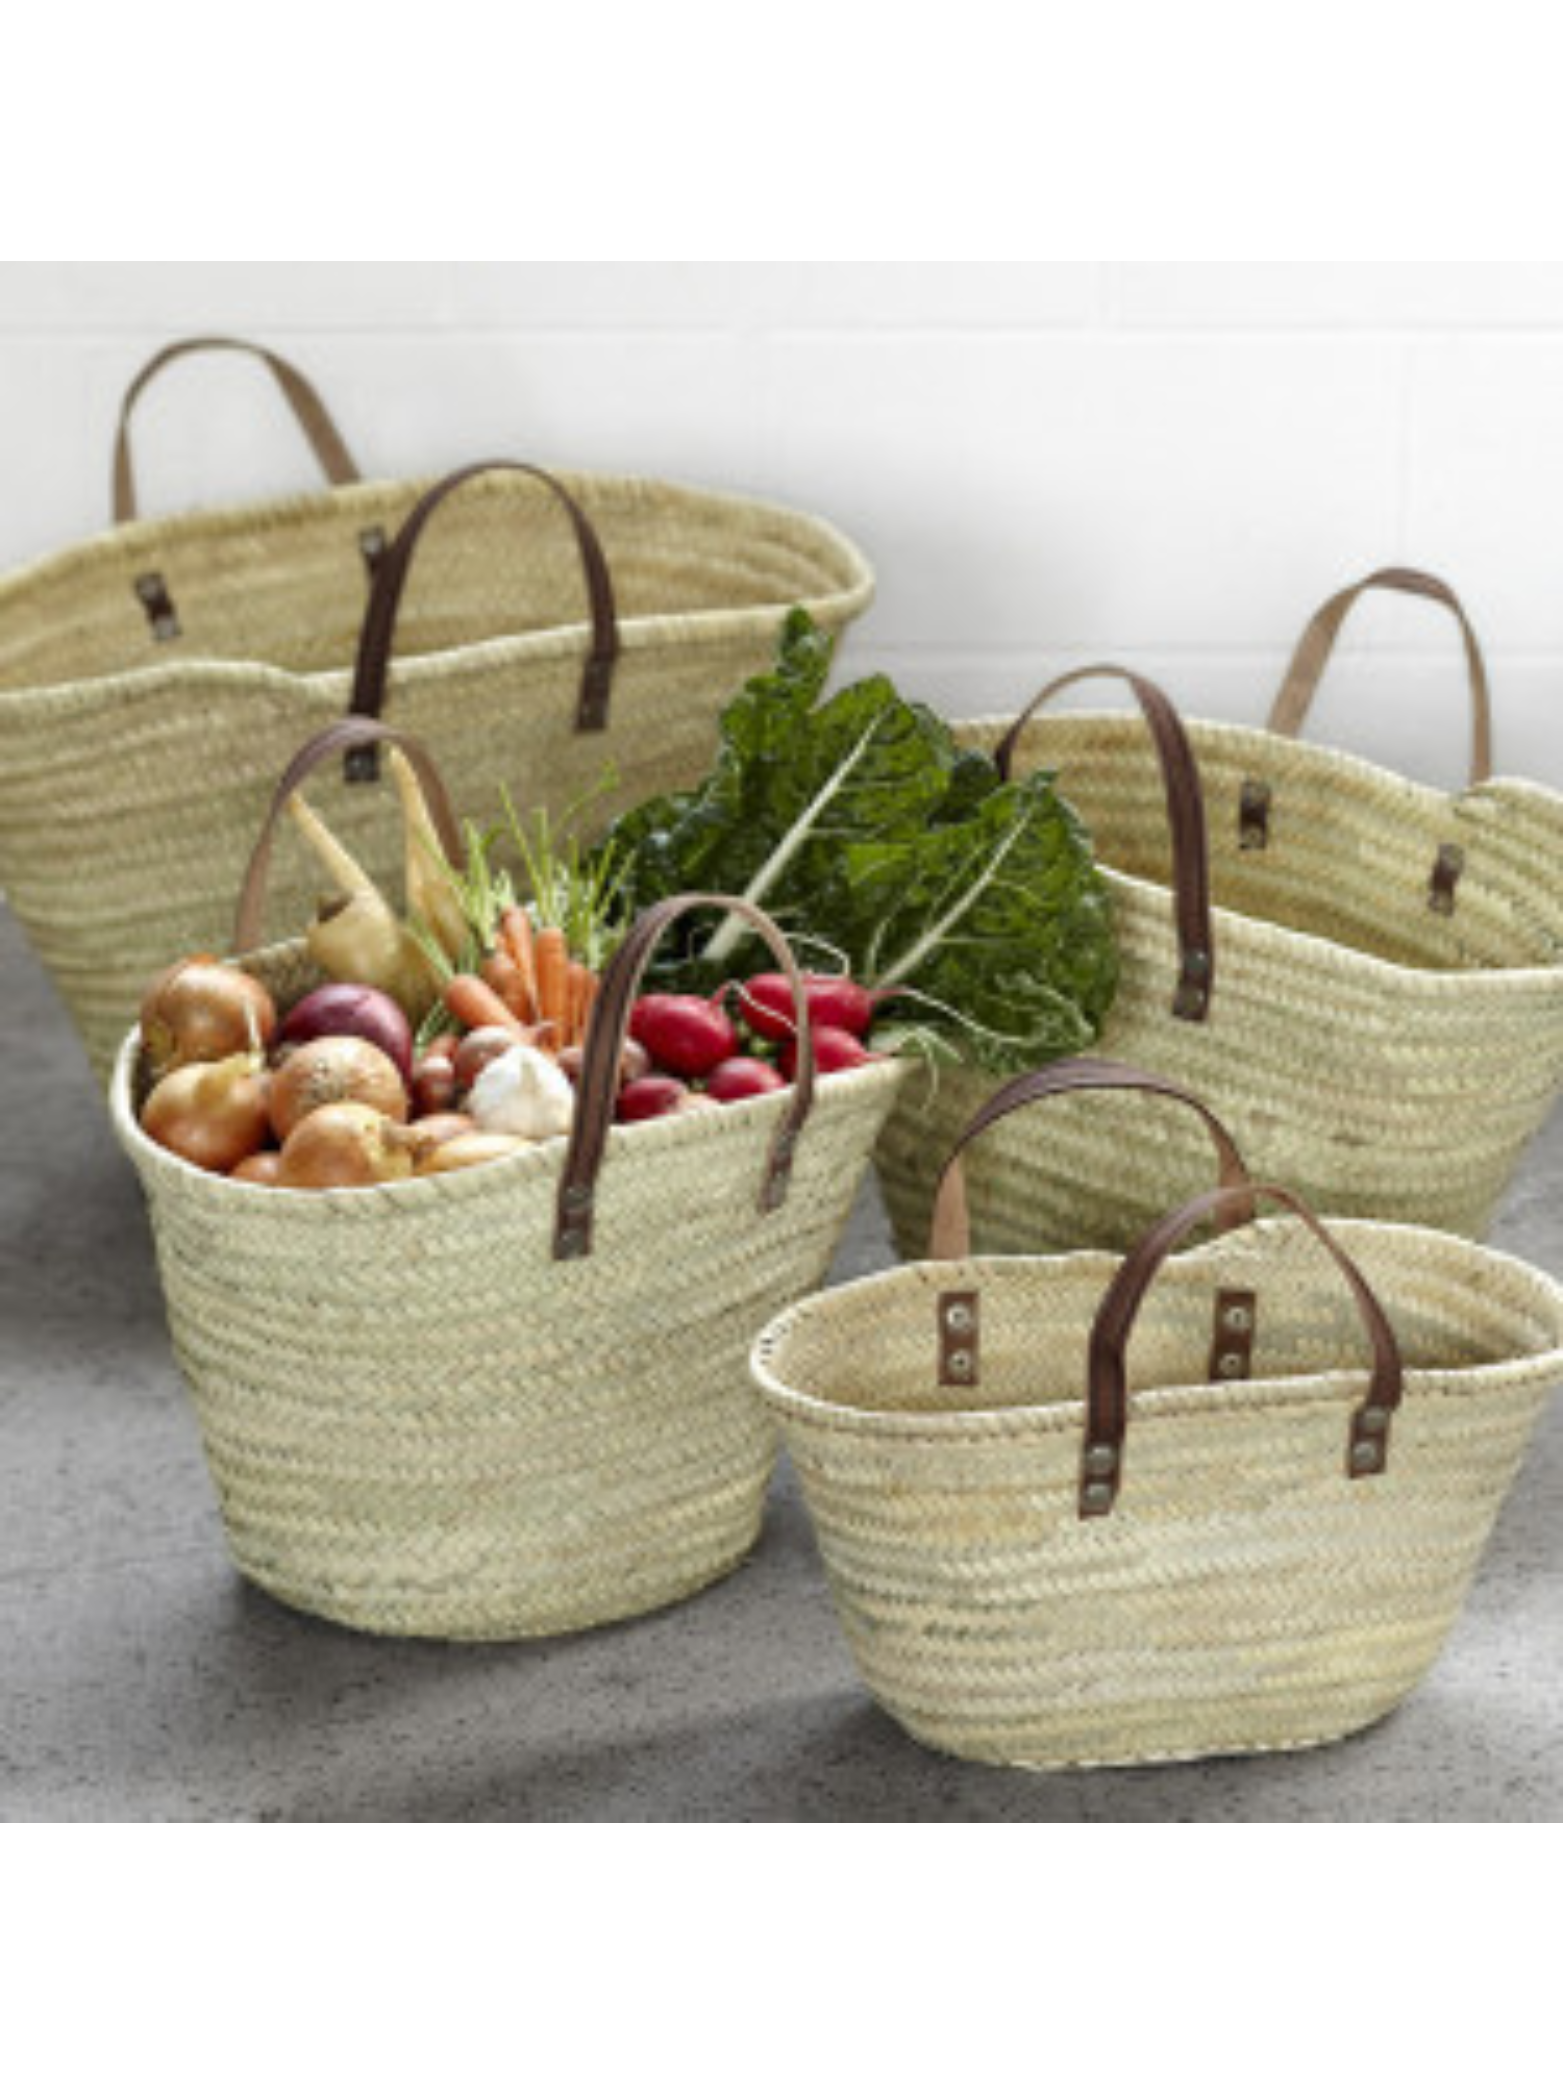 French Market Baskets